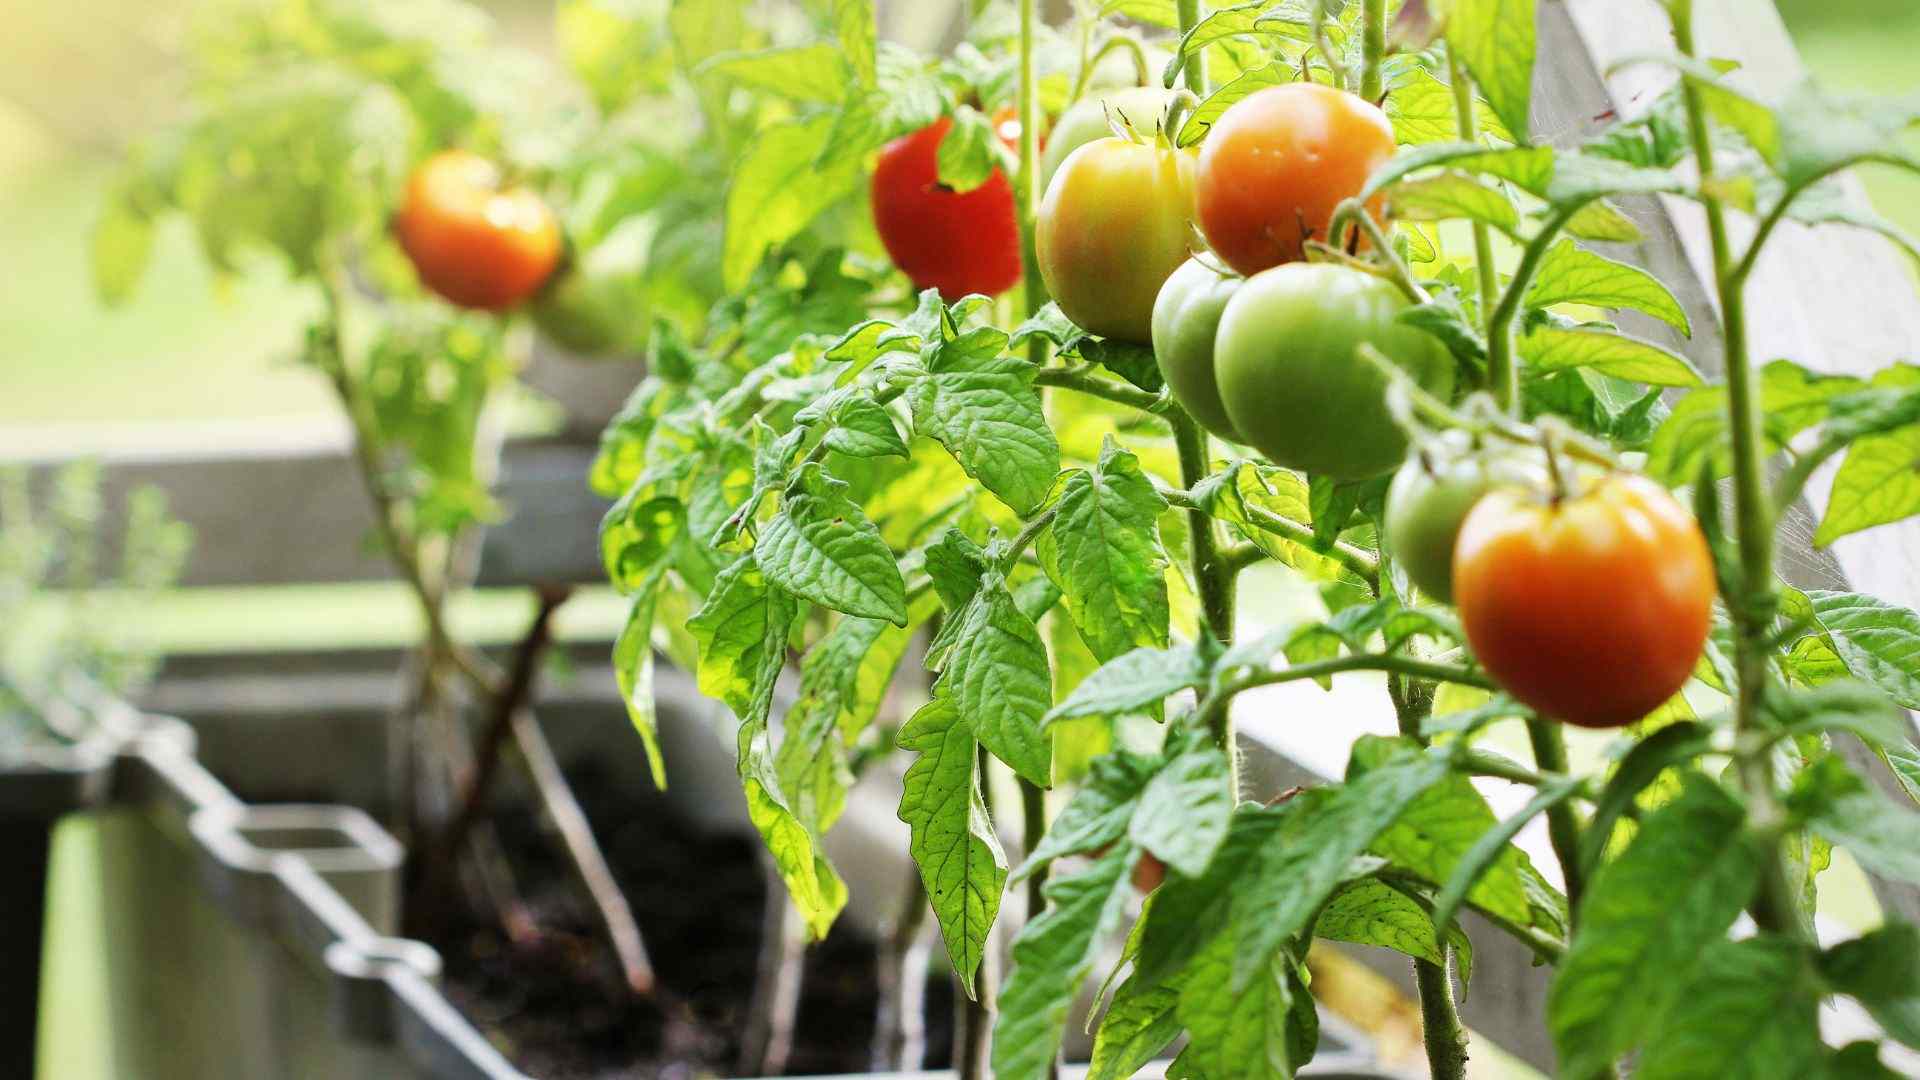 Gardening tomatoes in apartment